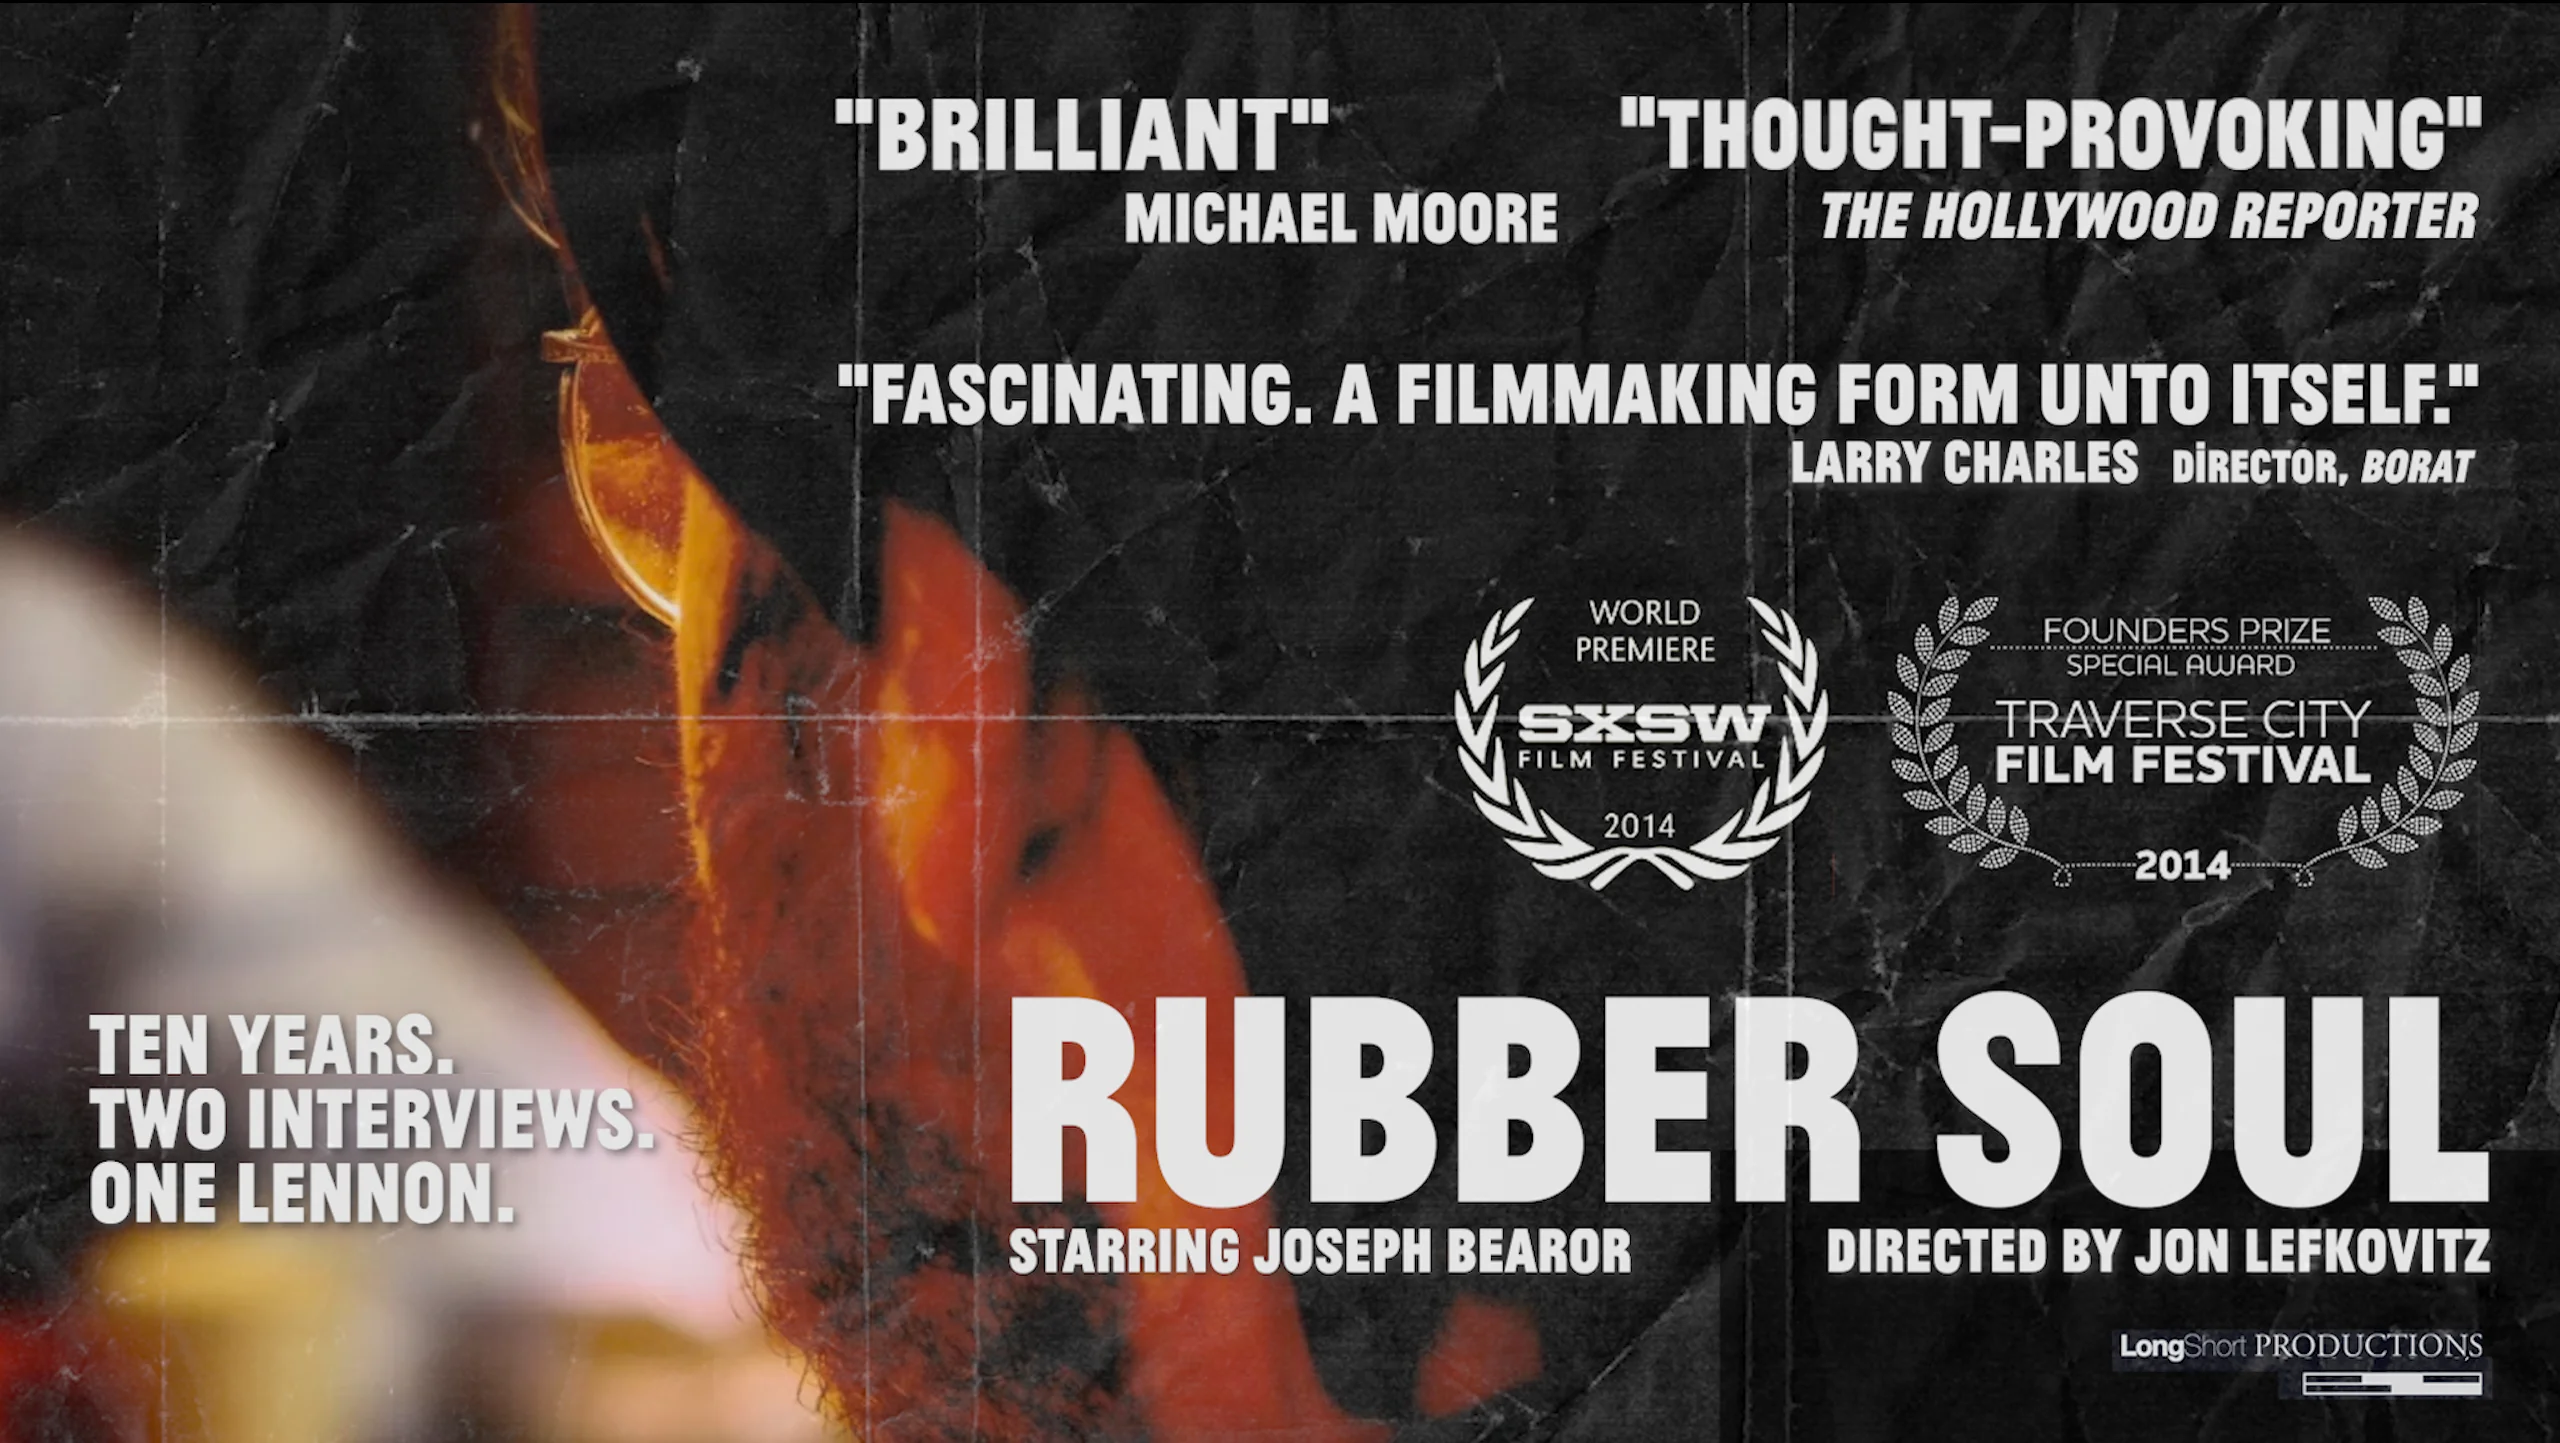 RUBBER SOUL trailer on Vimeo